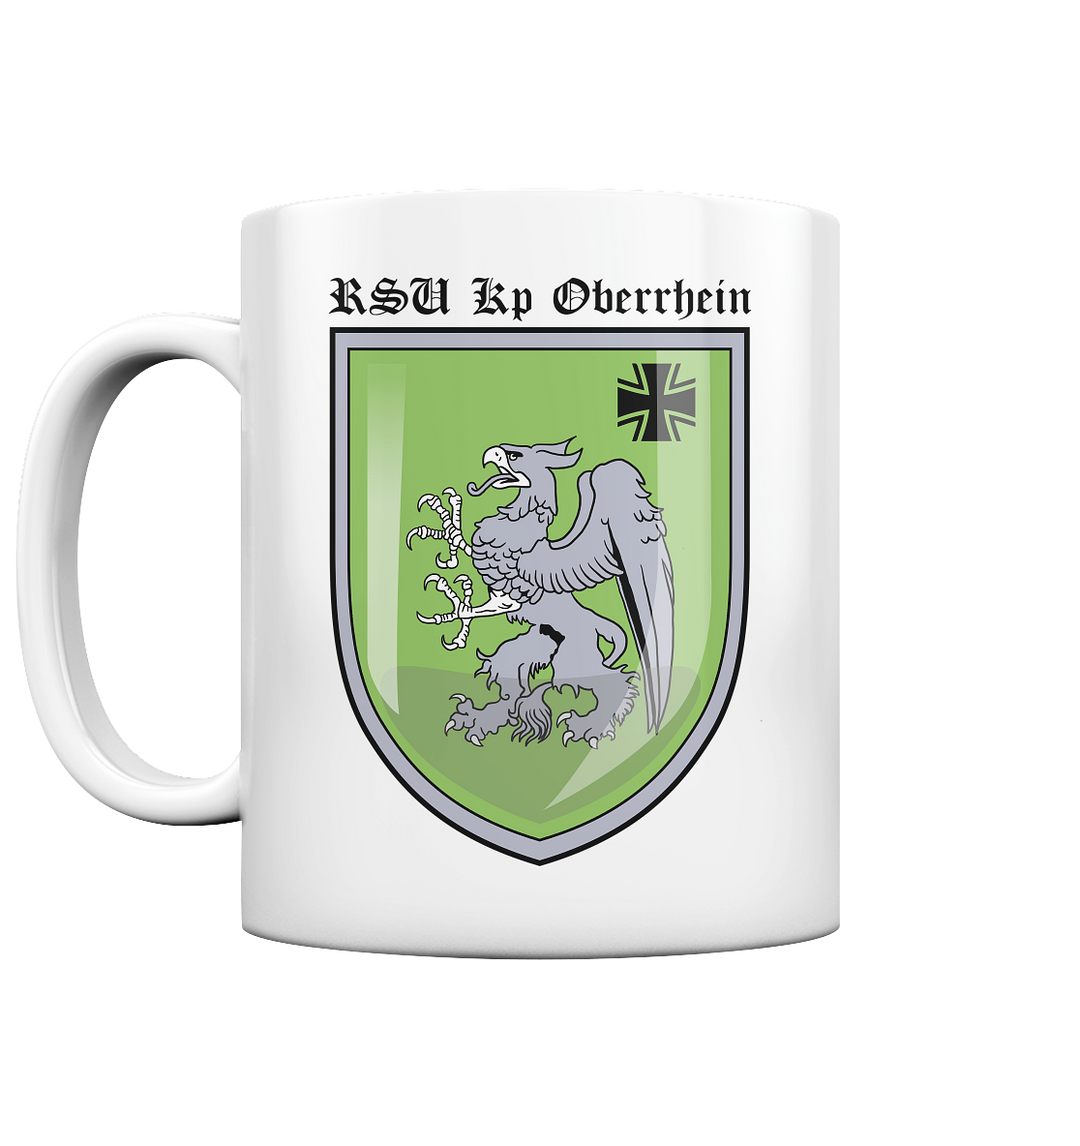 "RSU Oberrhein" - Tasse glossy